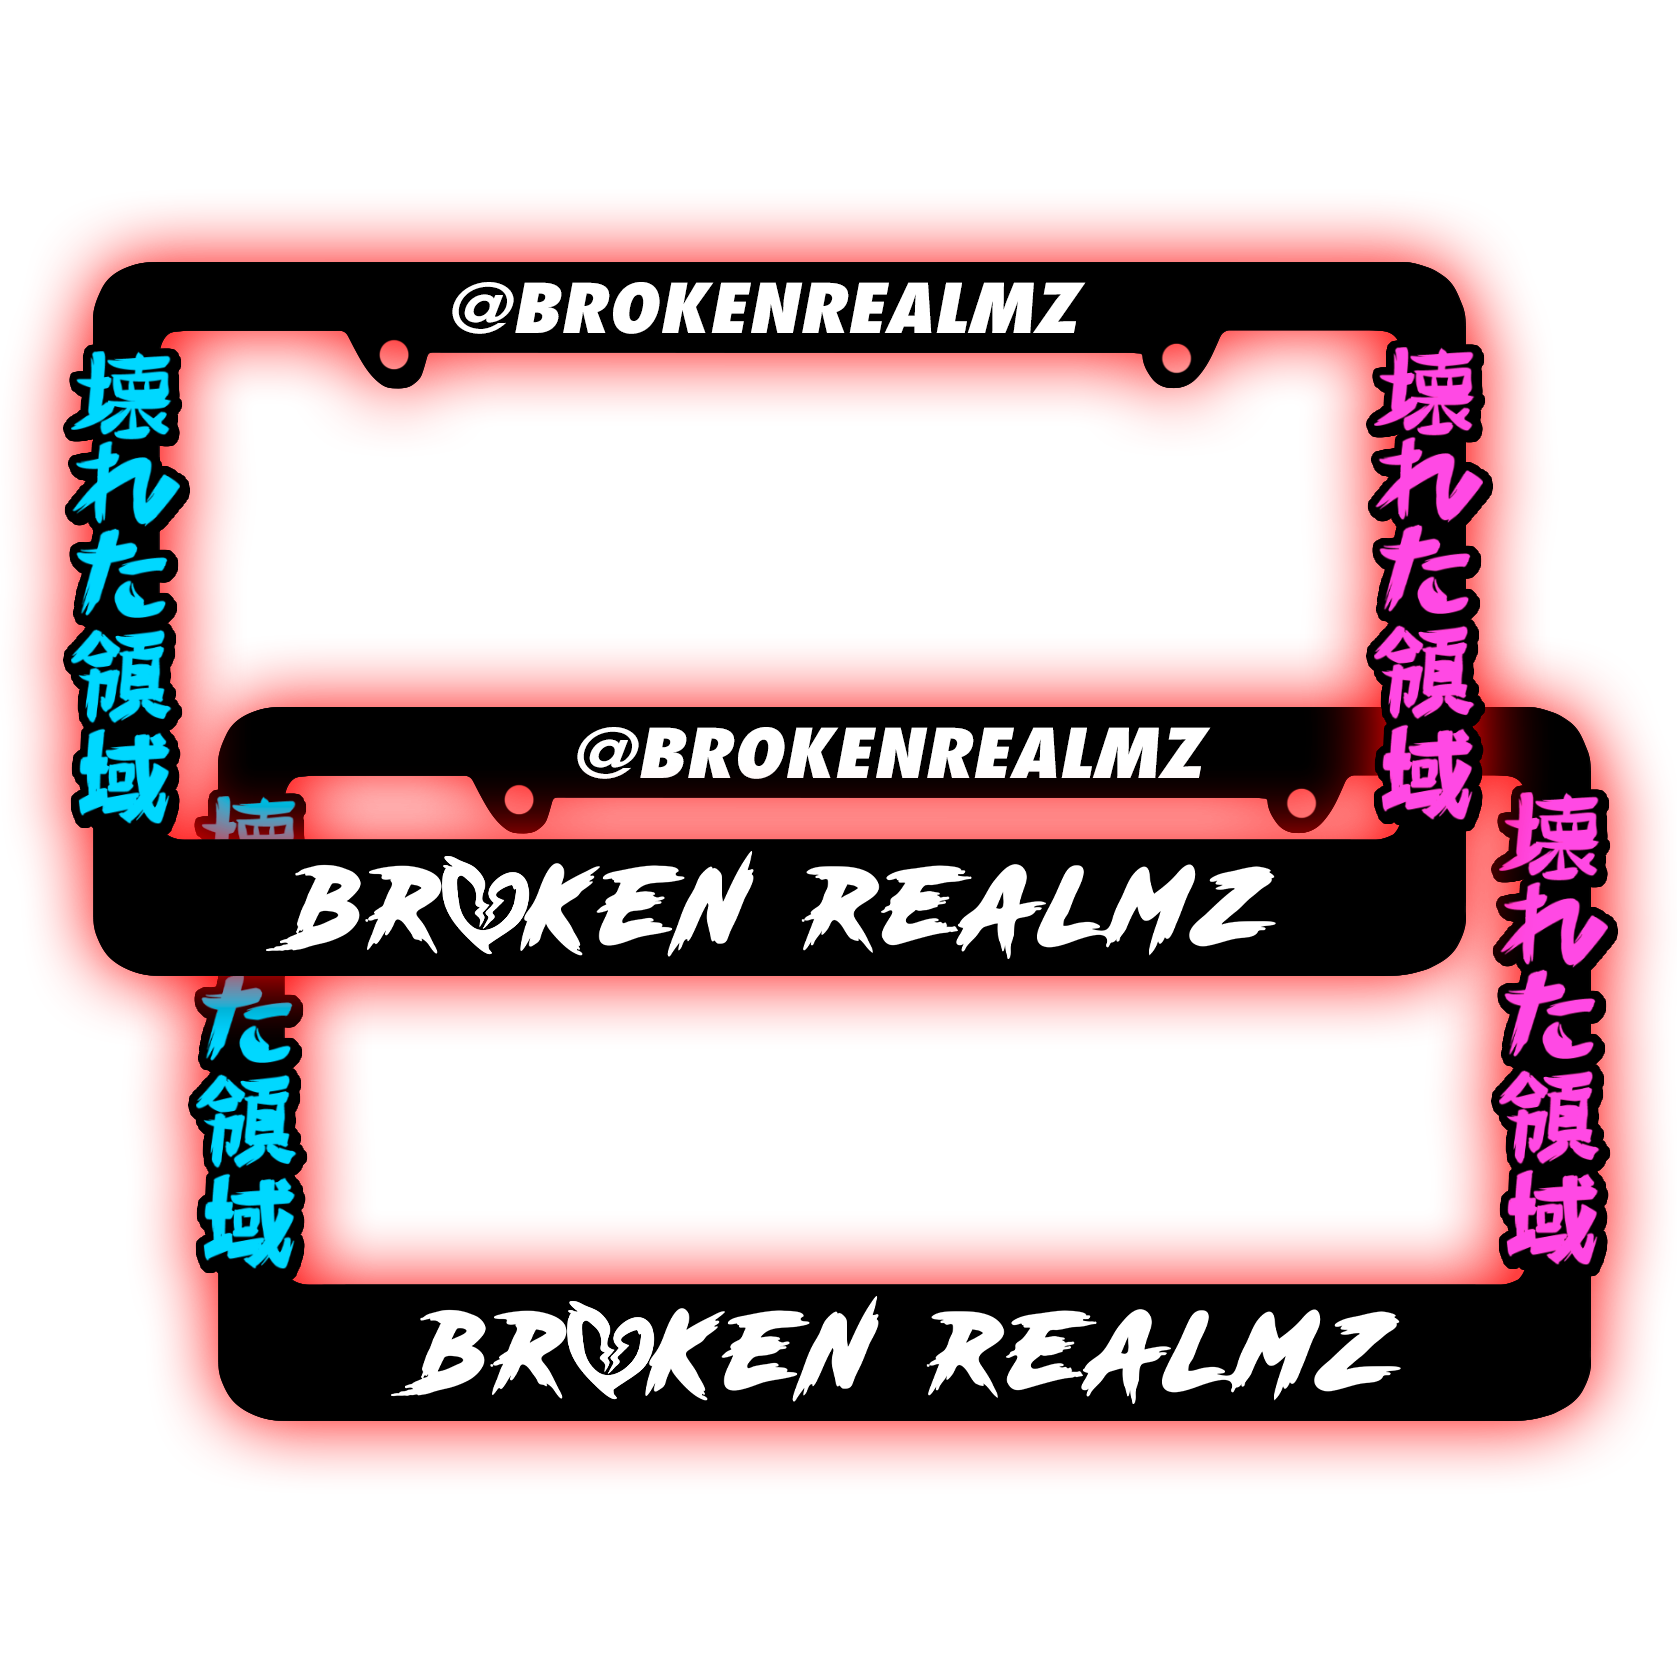 Broken Realmz License Plate Frame